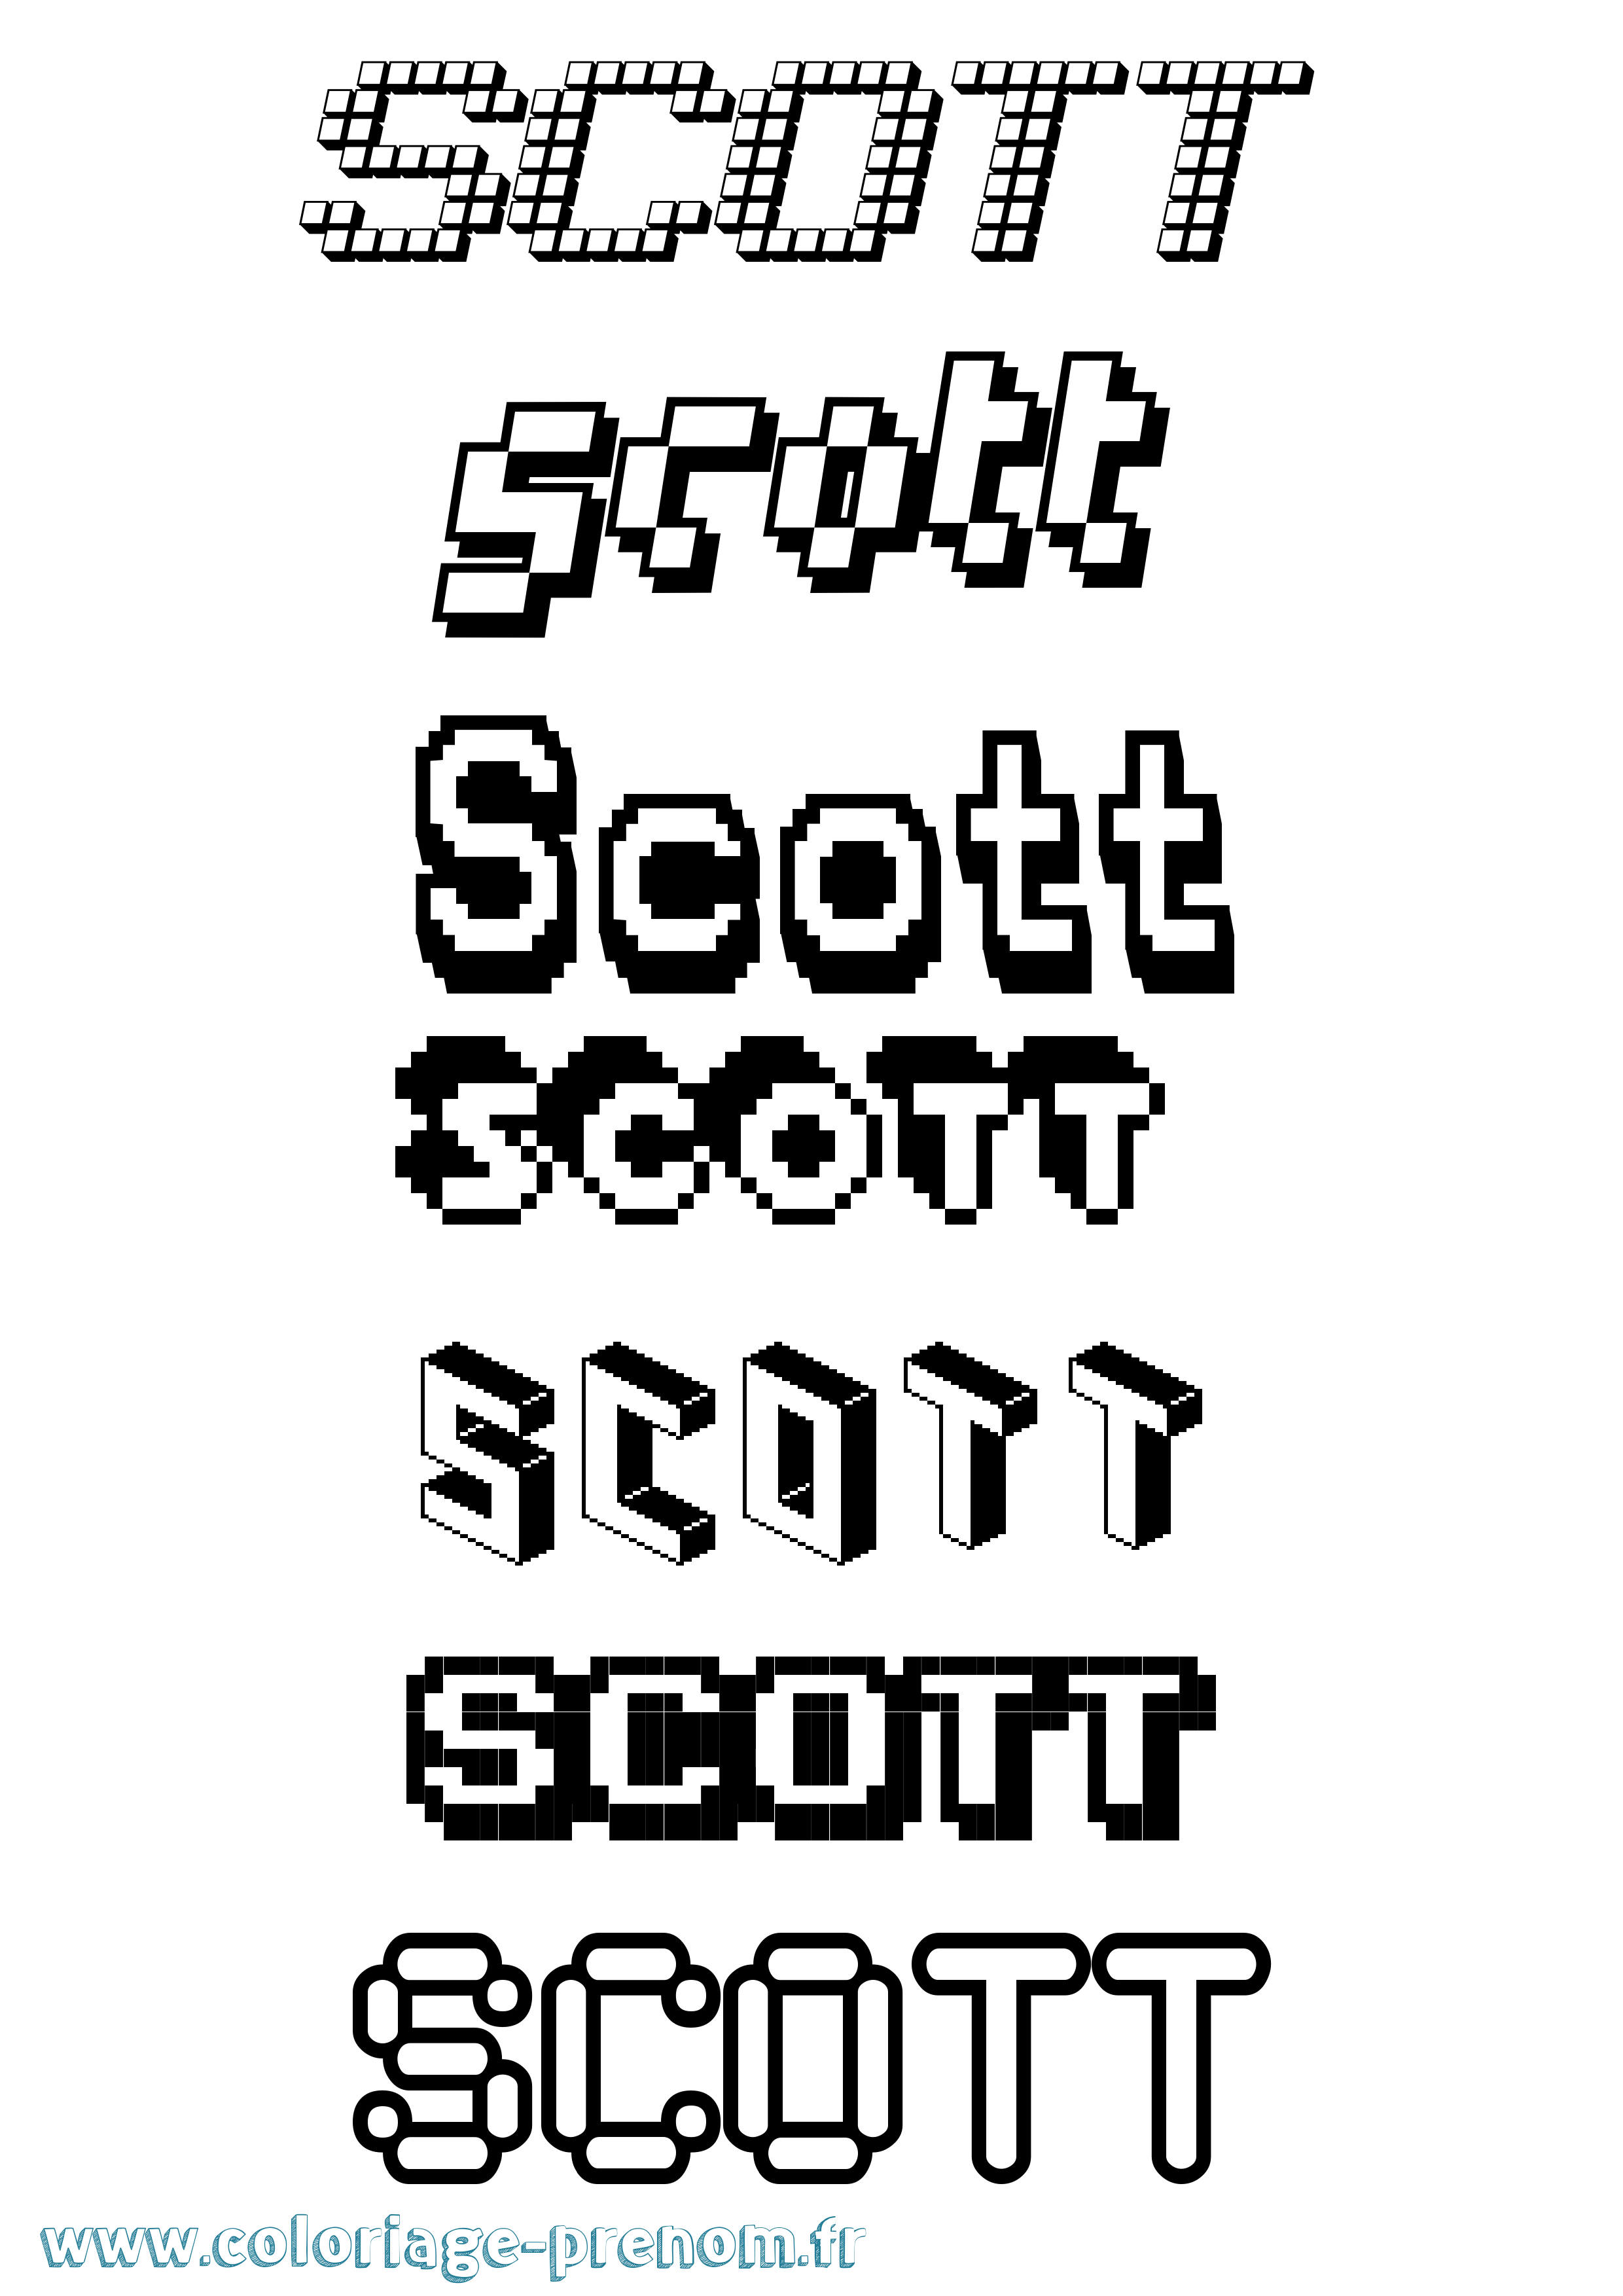 Coloriage prénom Scott Pixel